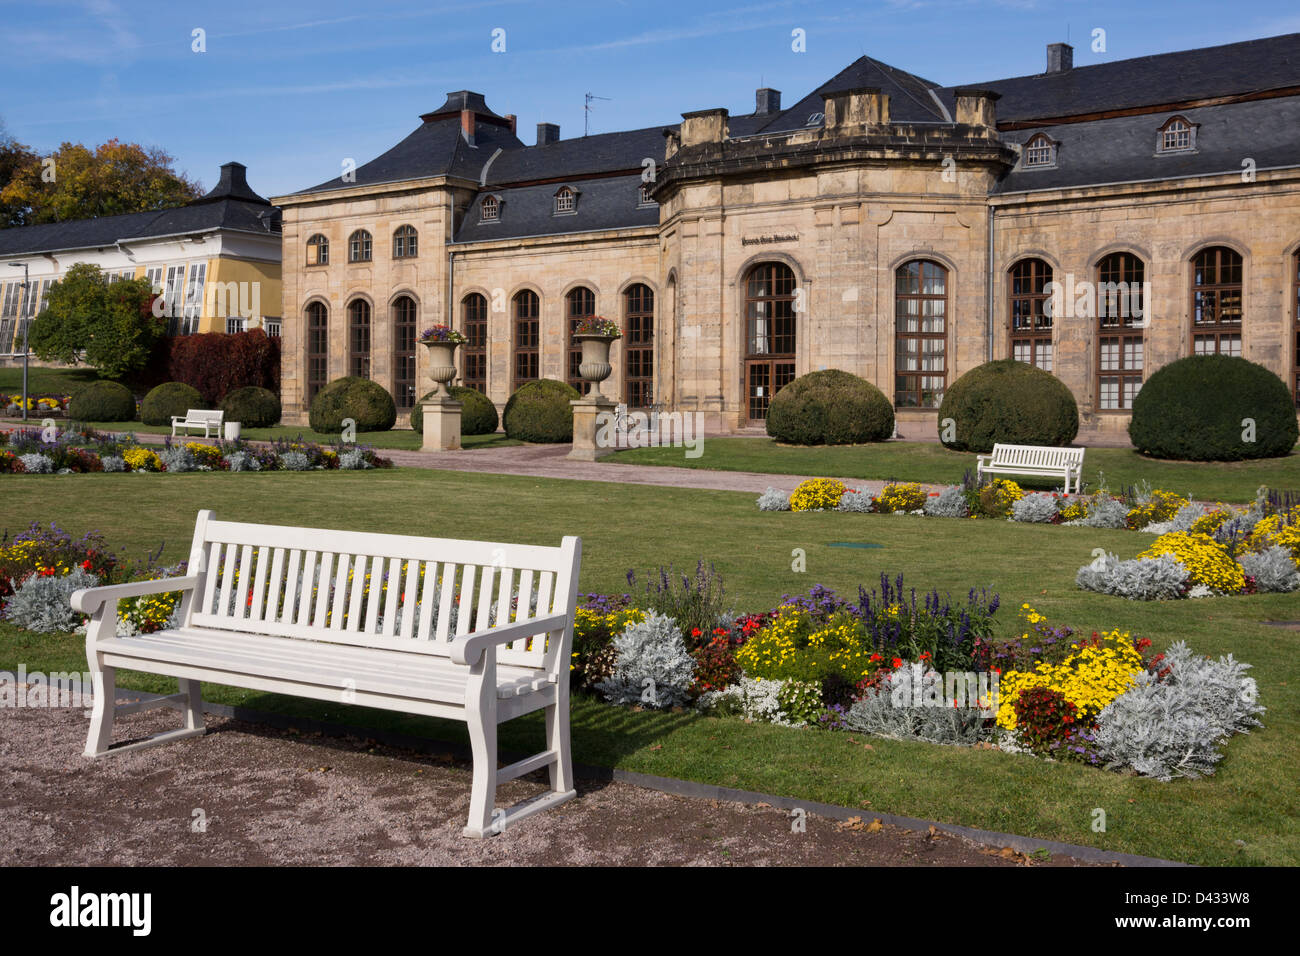 Orangery and baroque garden of Schloss Friedenstein castle, Gotha, Thuringia, Germany, Europe Stock Photo